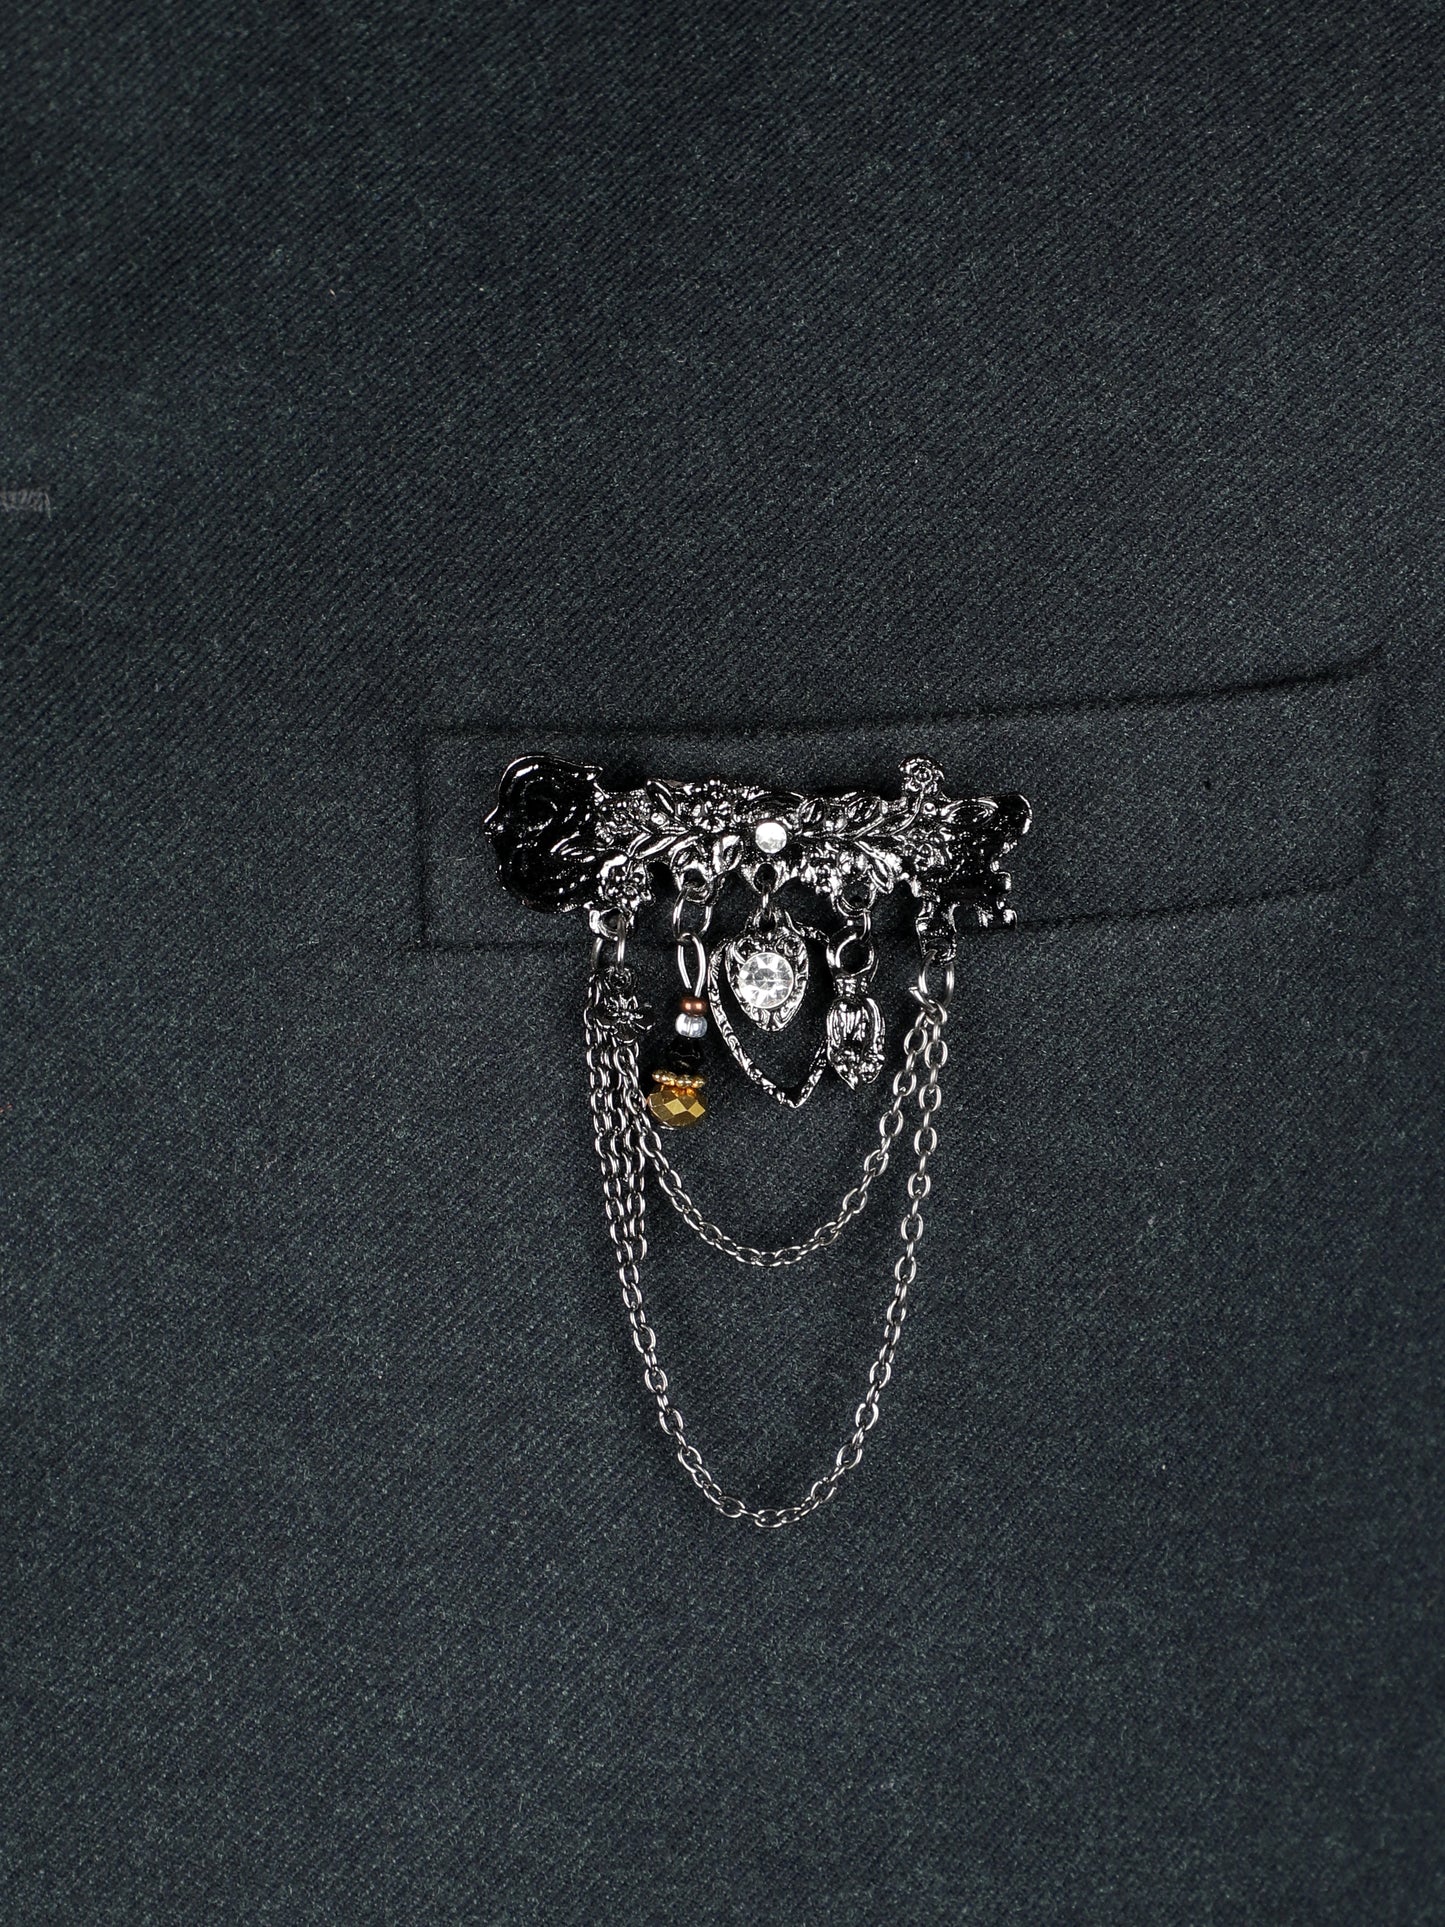 Alvaro Castagnino Metallic Black Colored Fancy Brooch for Men's